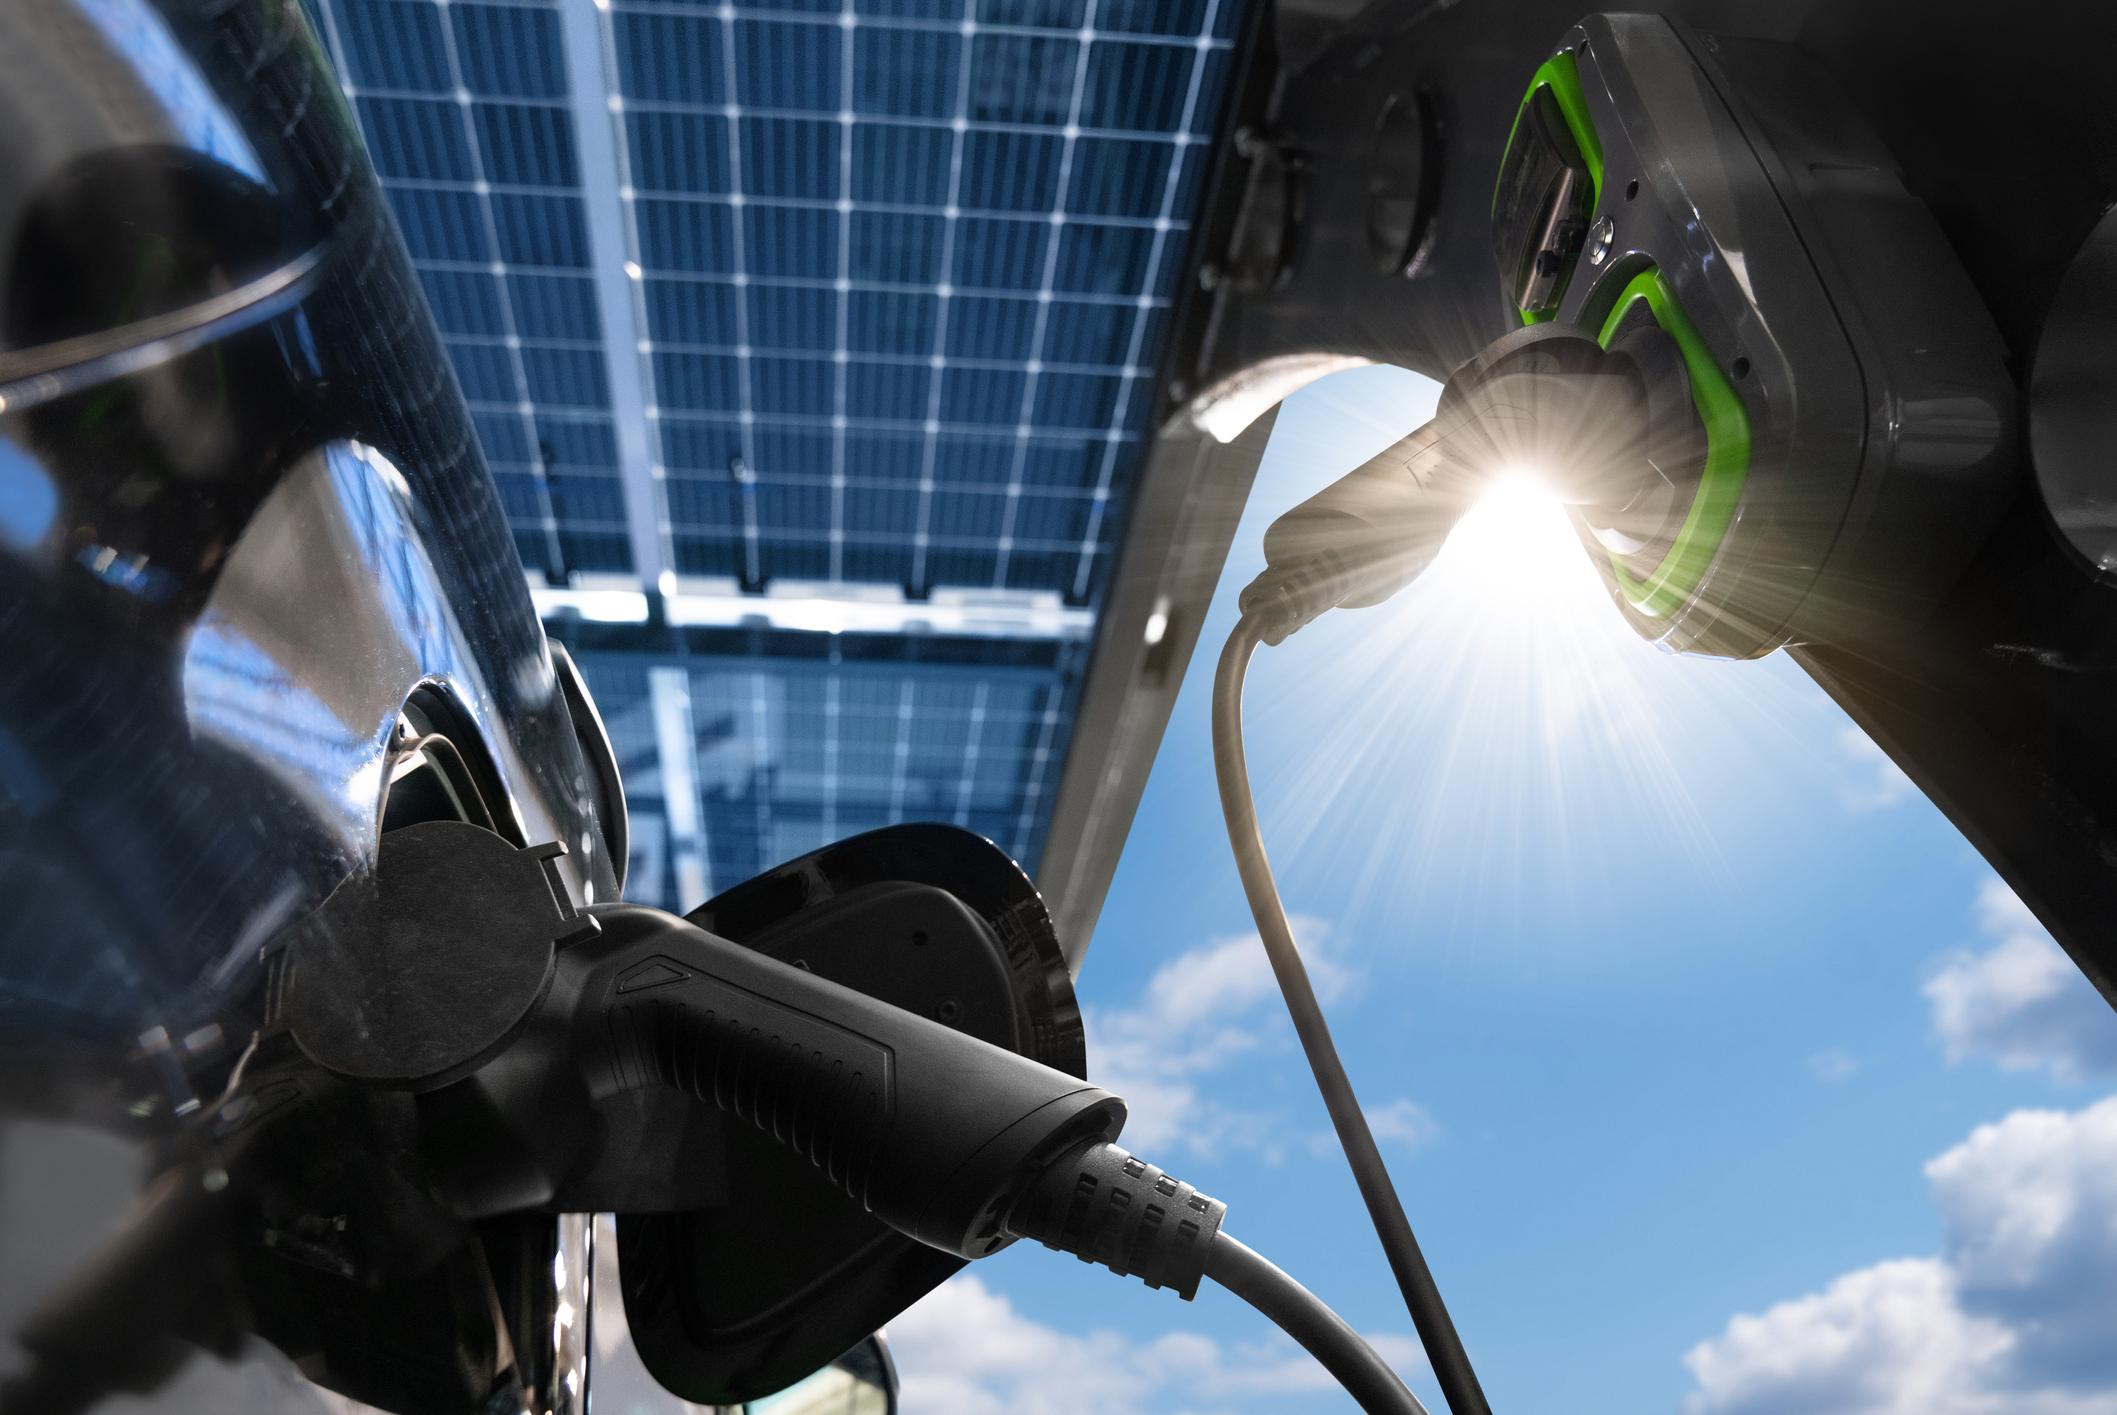 【Part 1】シリコンバレーからの新・電力網への提言： テスラが実現済みの蓄電池、EV、ソーラー発電、 Virtual Power Plant垂直統合の分散化型電力網ドミナント・デザイン